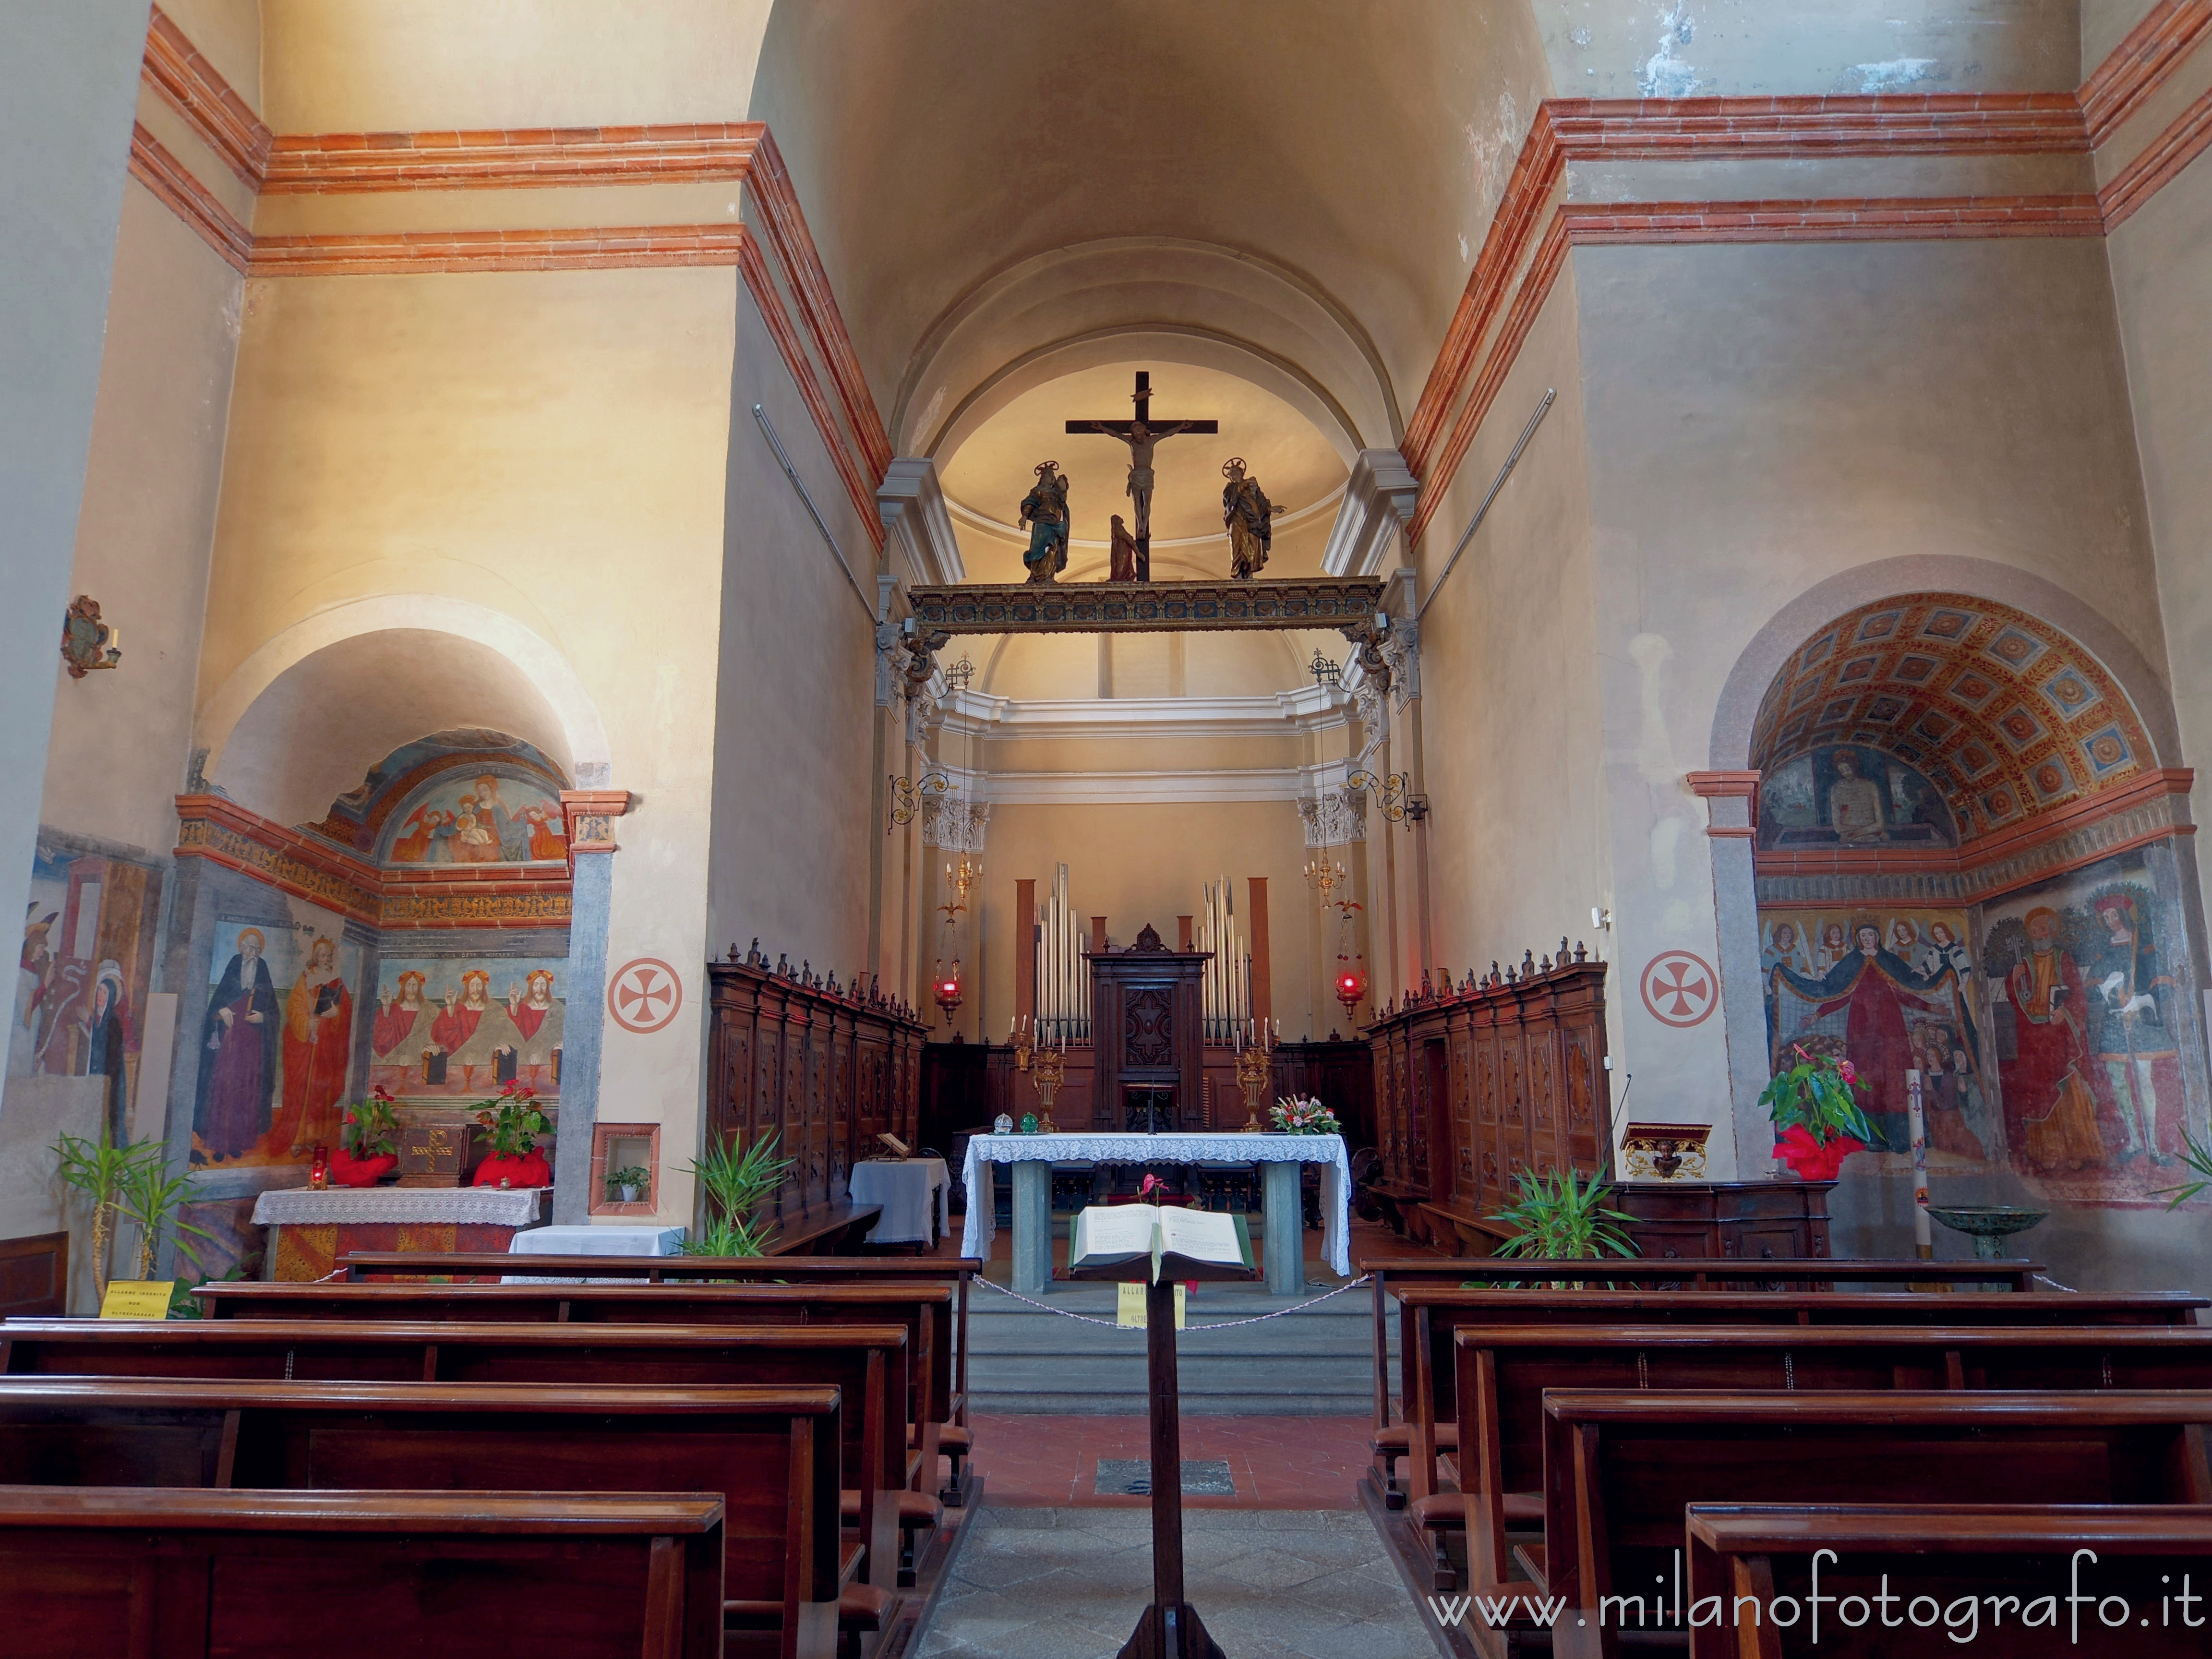 Benna (Biella, Italy): Presbytery and chapels of the Church of San Pietro - Benna (Biella, Italy)